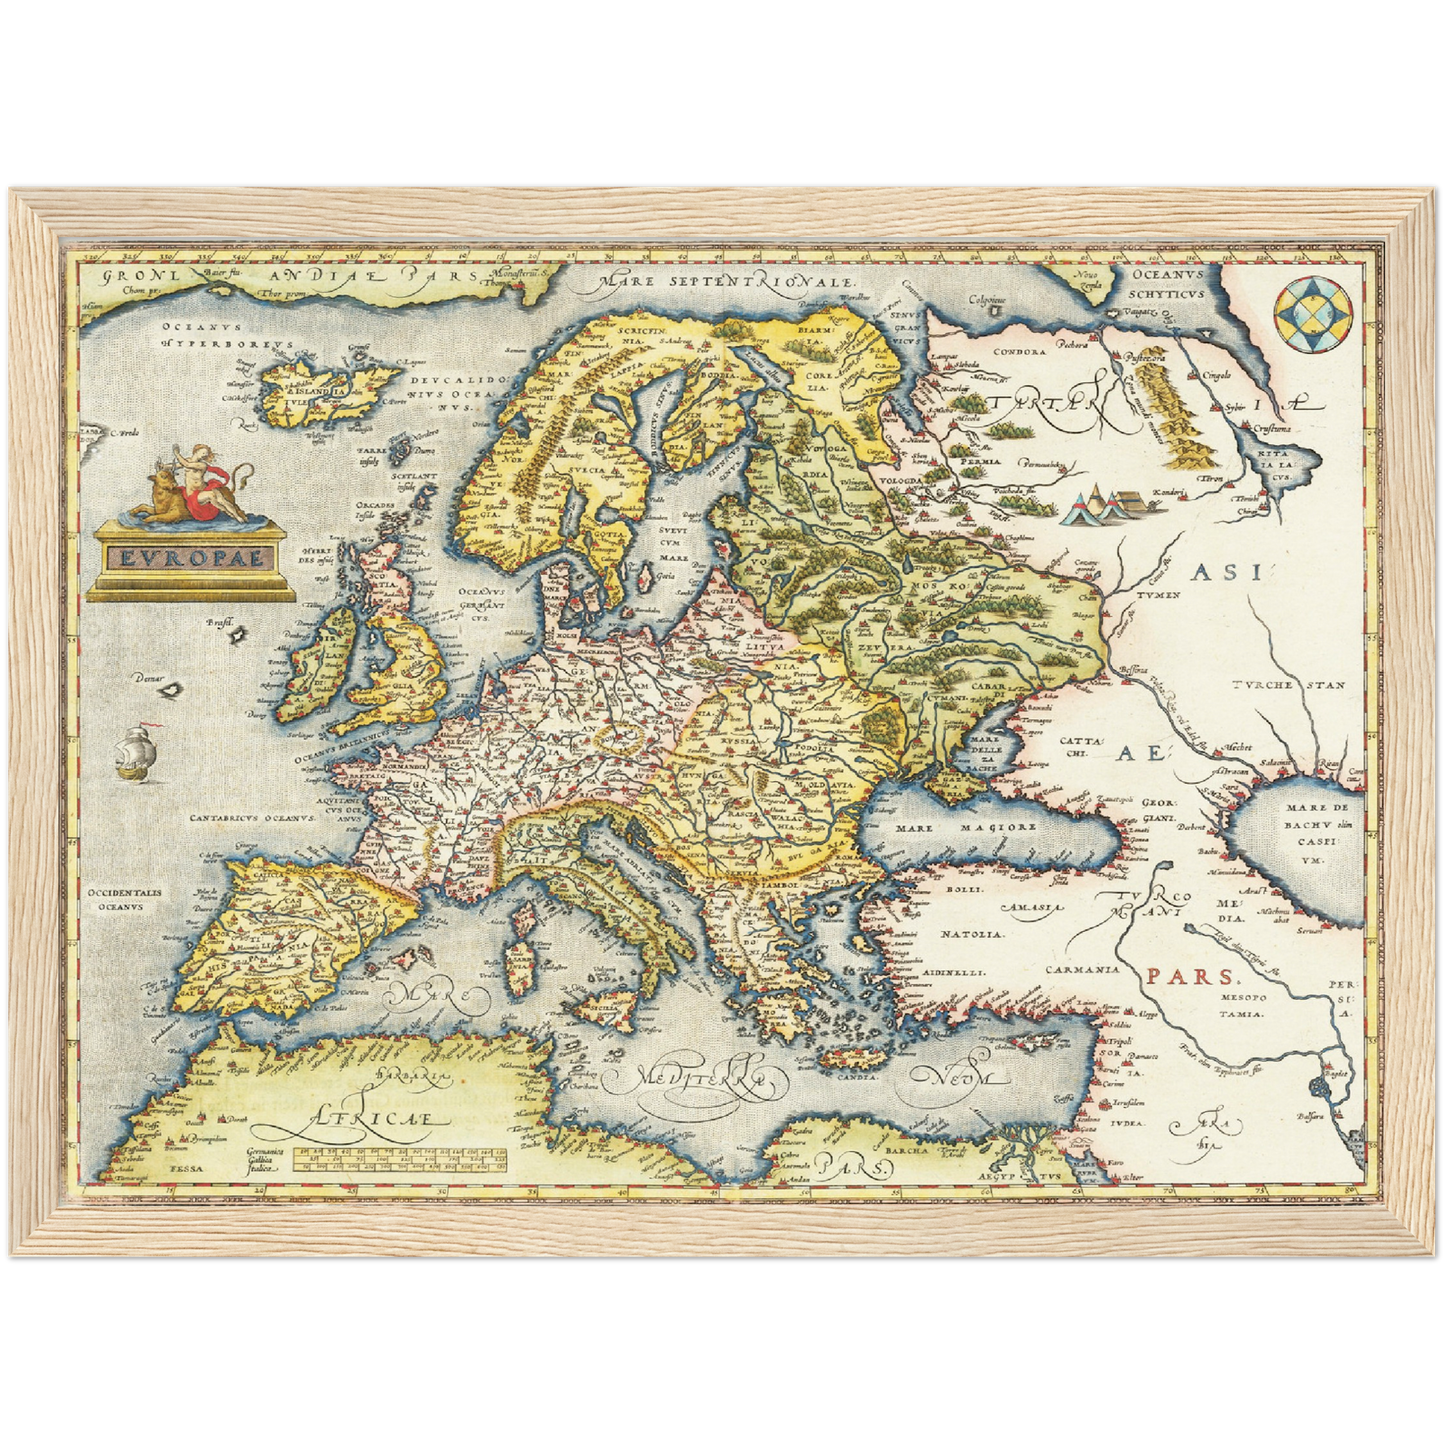 Historische Europakarte um 1570